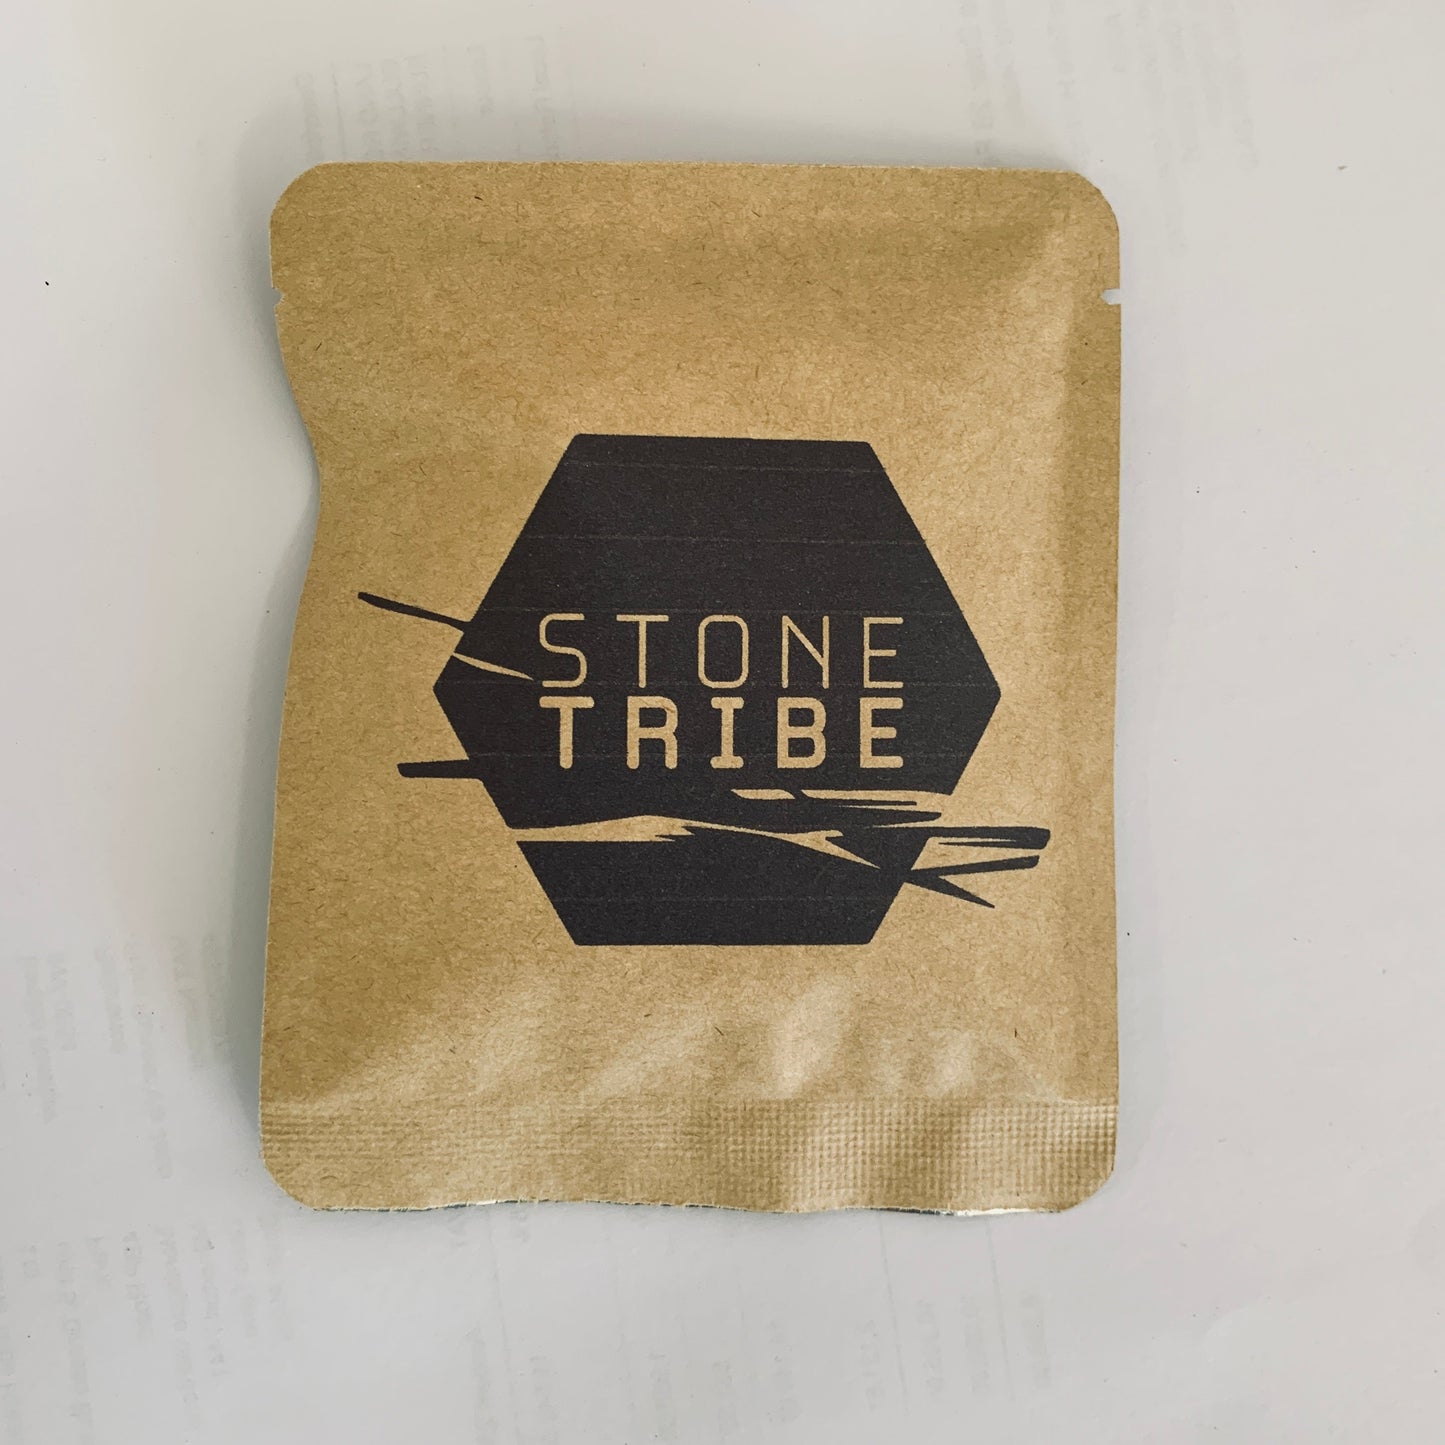 STONE TRIBE COFFEE SACHET(box of 10)